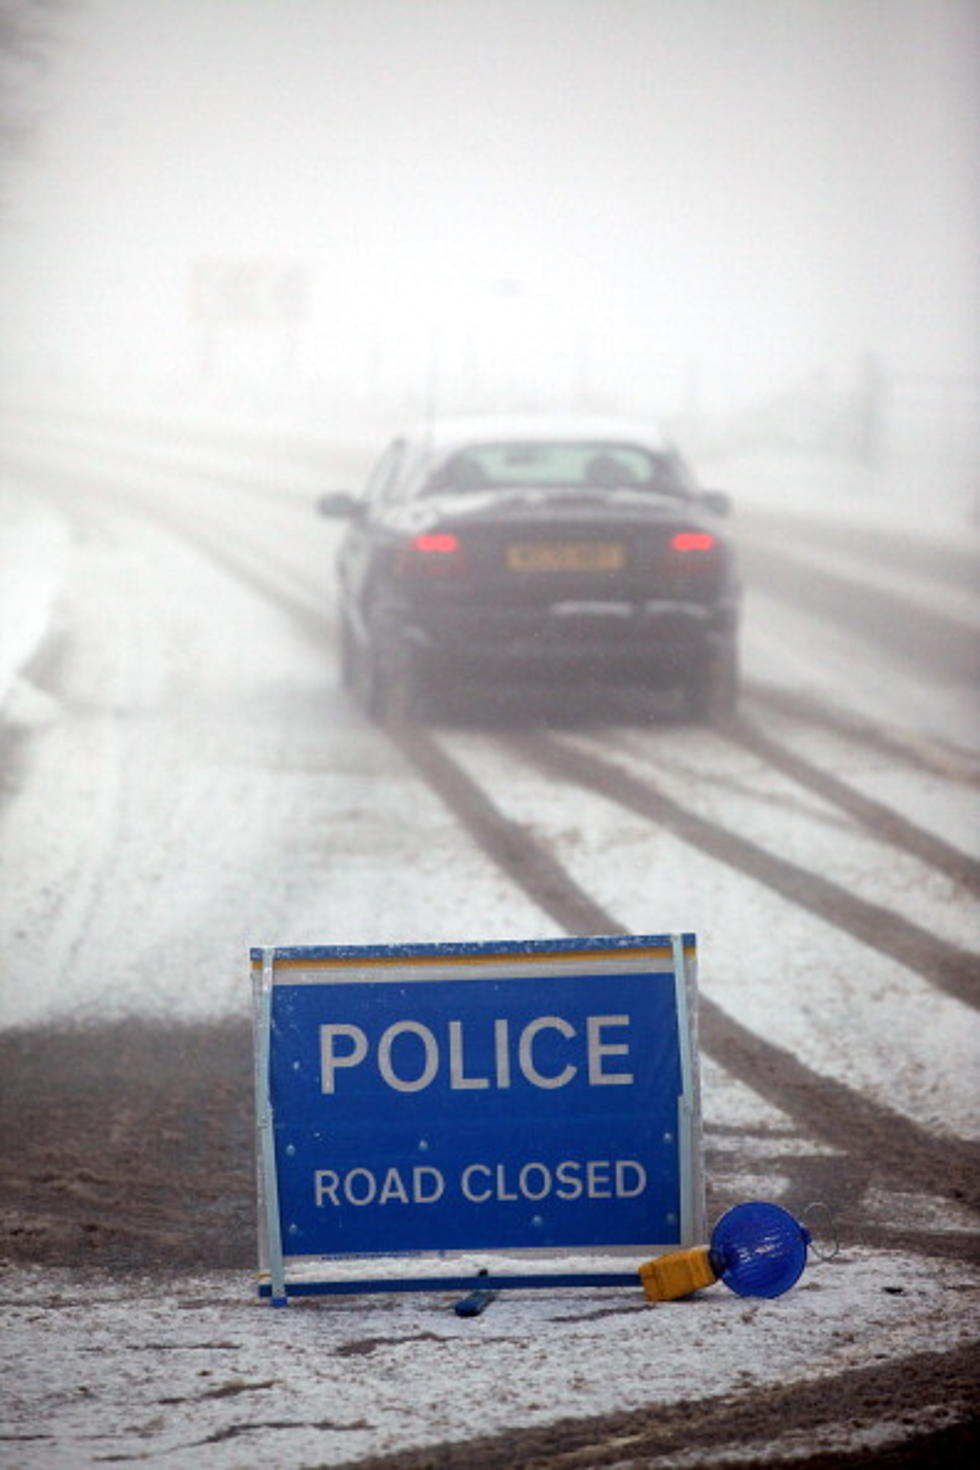 More Snow, More Road Closures!